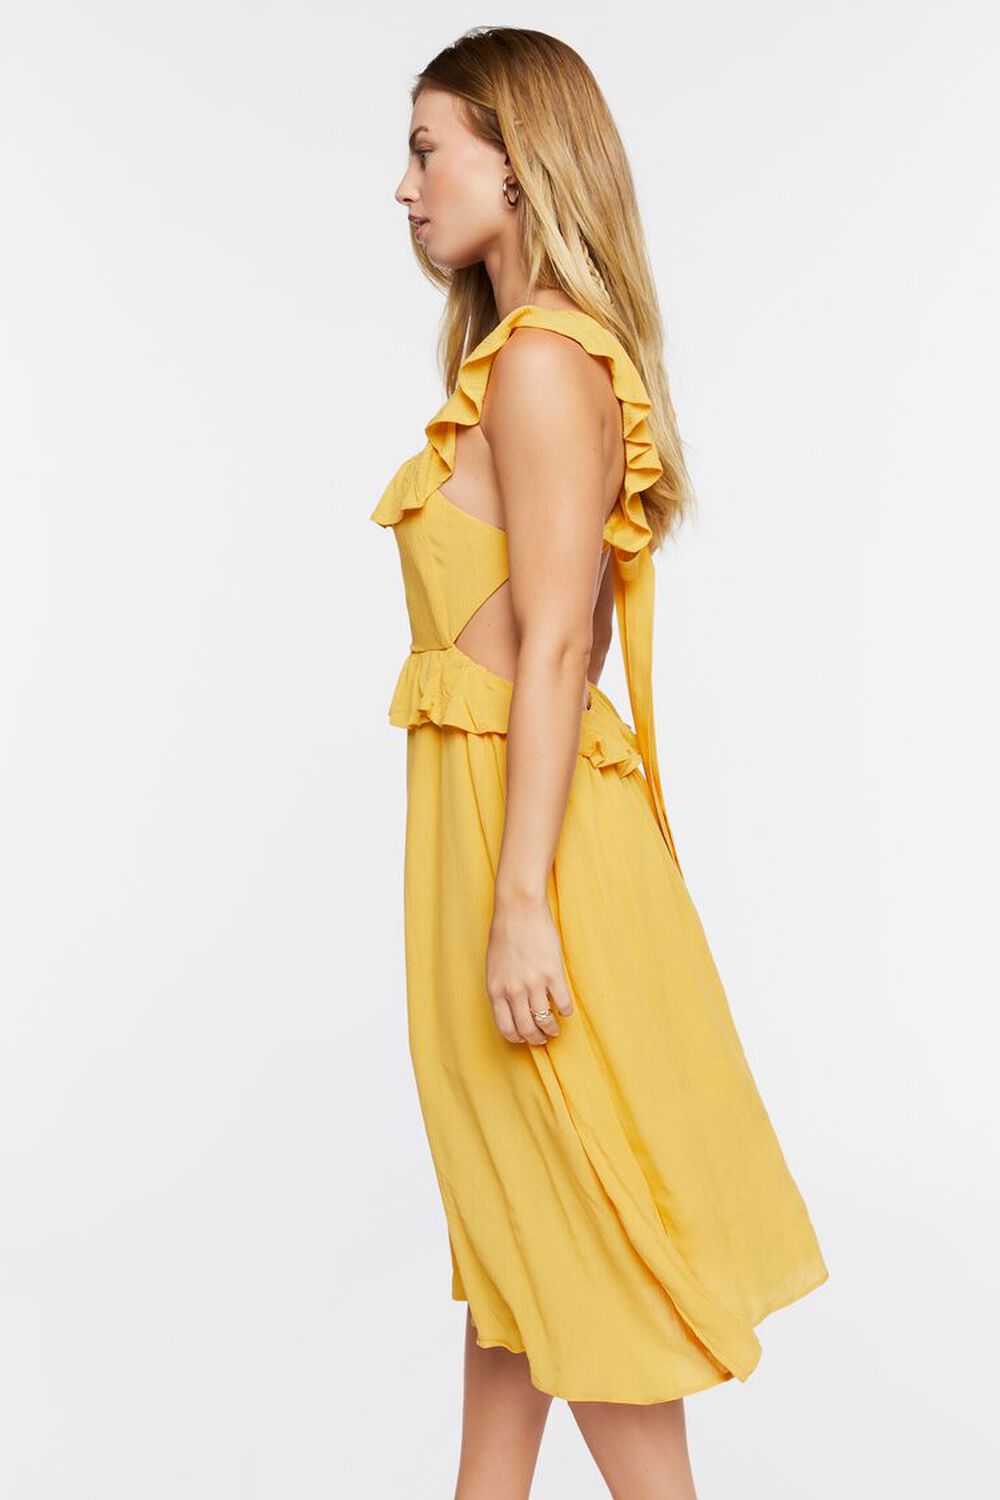 YELLOW GOLD Ruffle Tie-Back Midi Dress, image 2